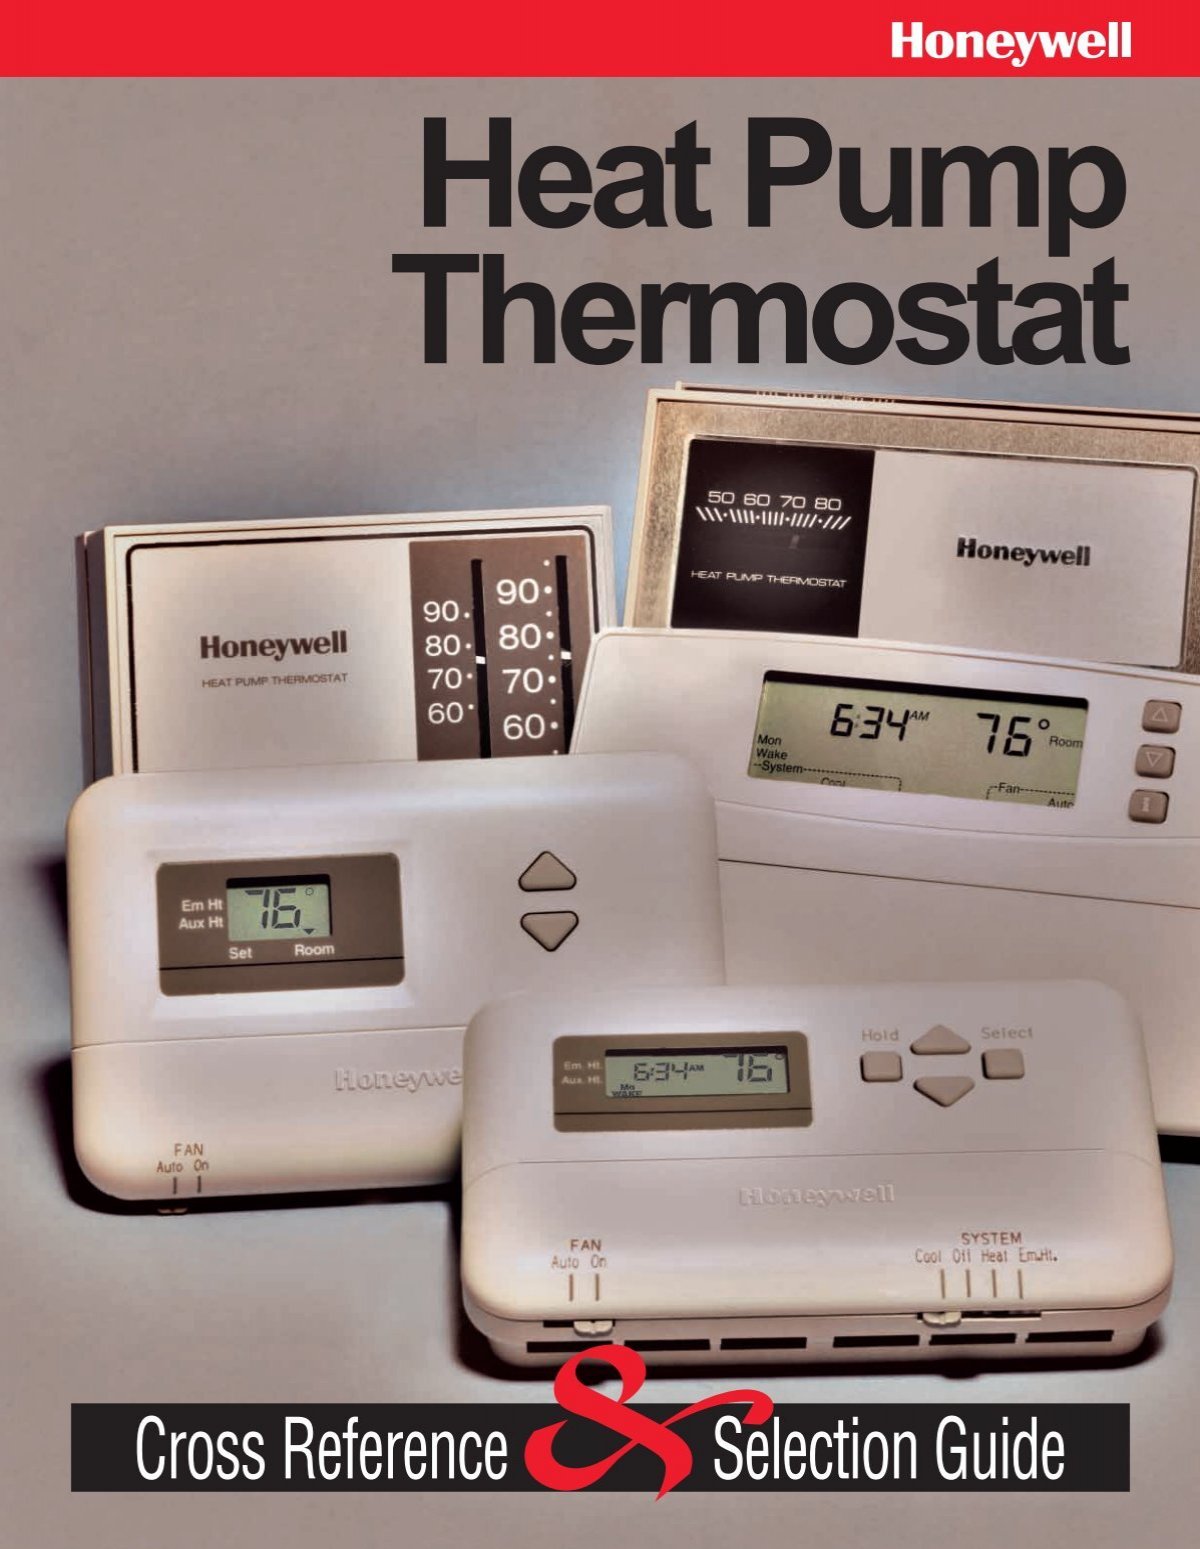 Heat Pump Thermostat Controls Central